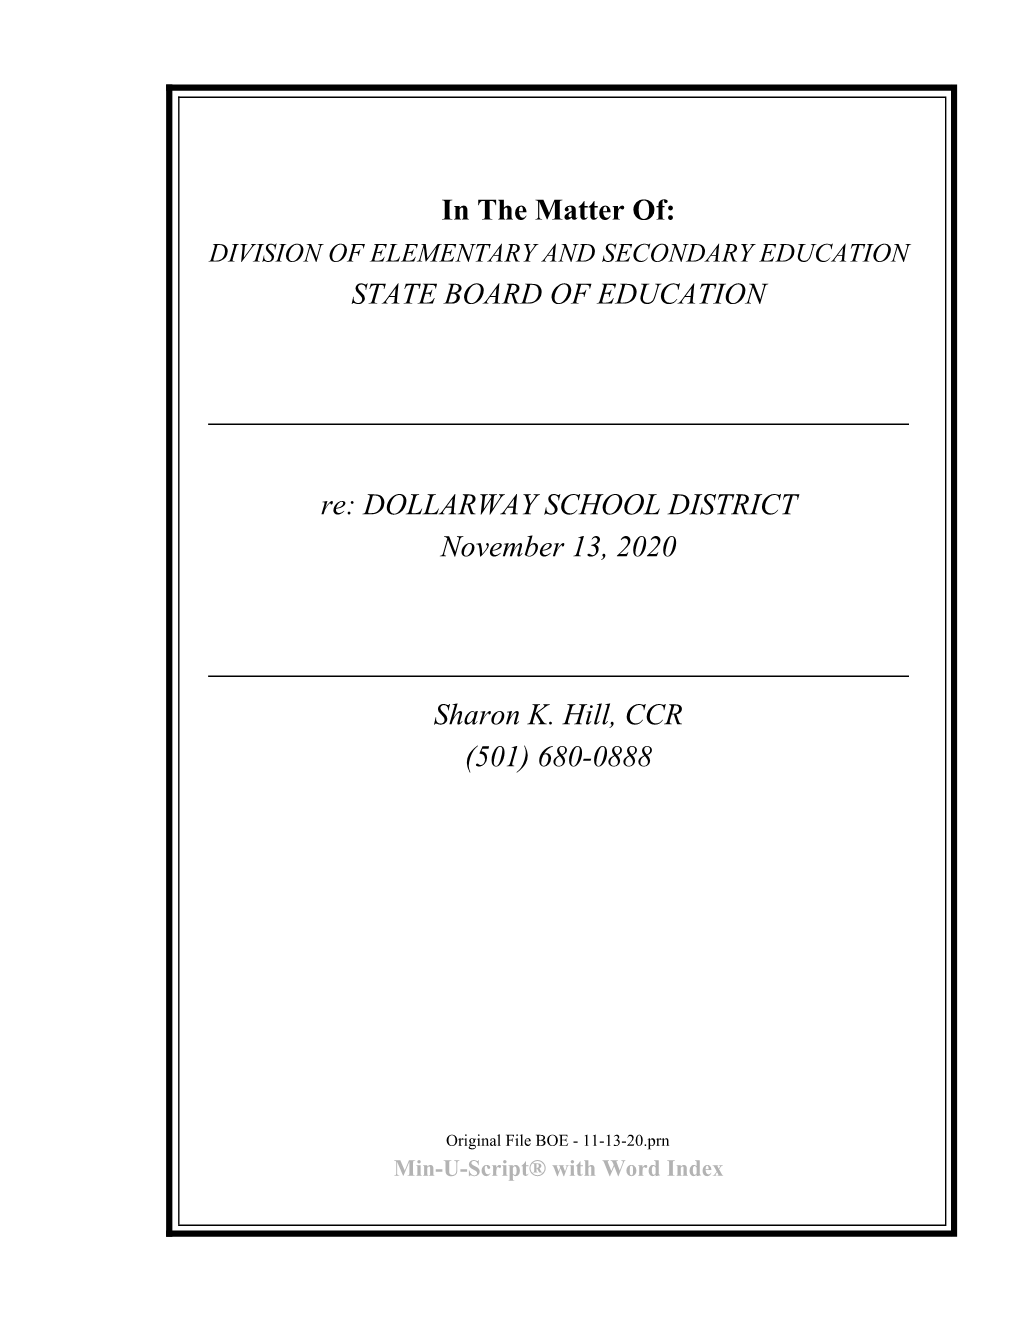 F-Re: DOLLARWAY SCHOOL DISTRICT-November 13, 2020